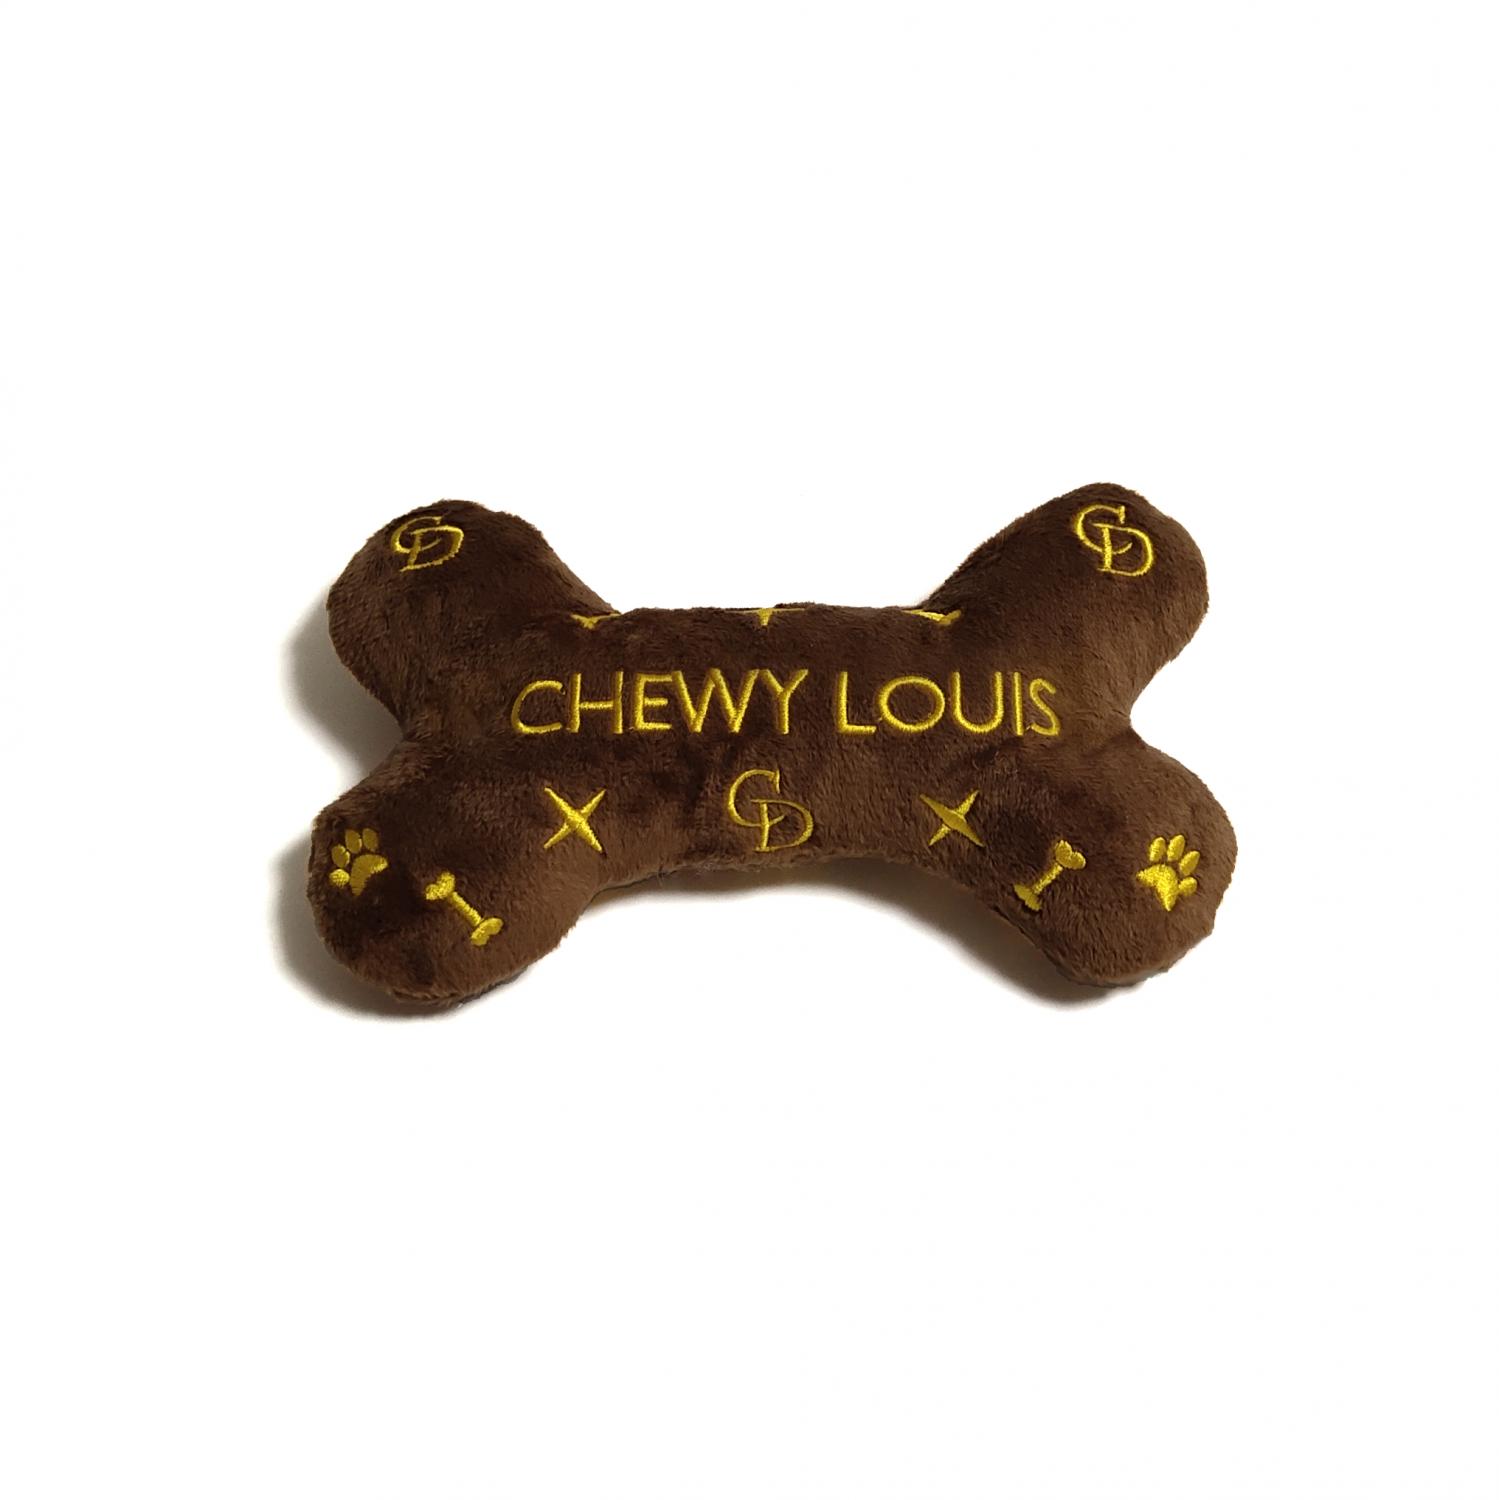 Chewy Louis Bone